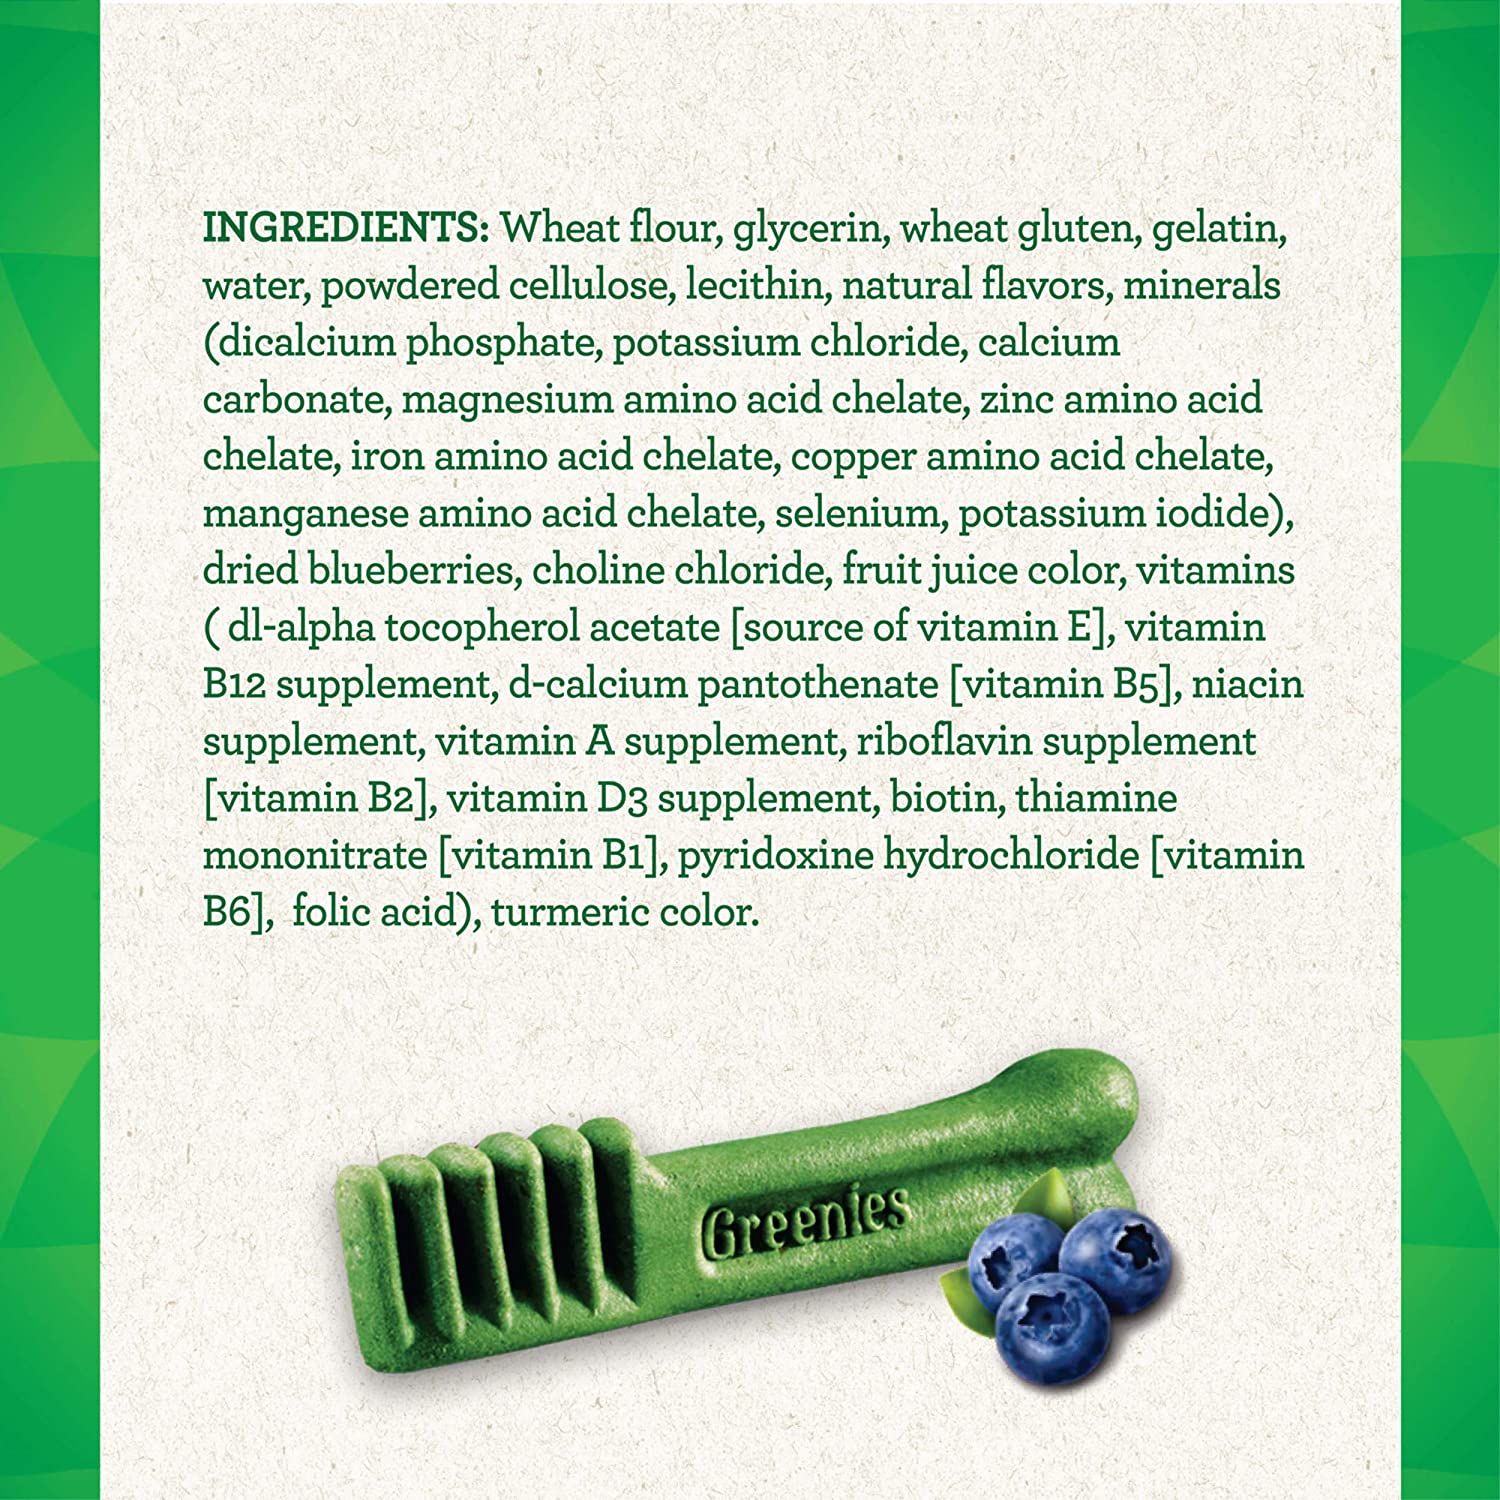 Greenies Regular Blueberry Treat Pack Dental Dog Treats - 12 oz  